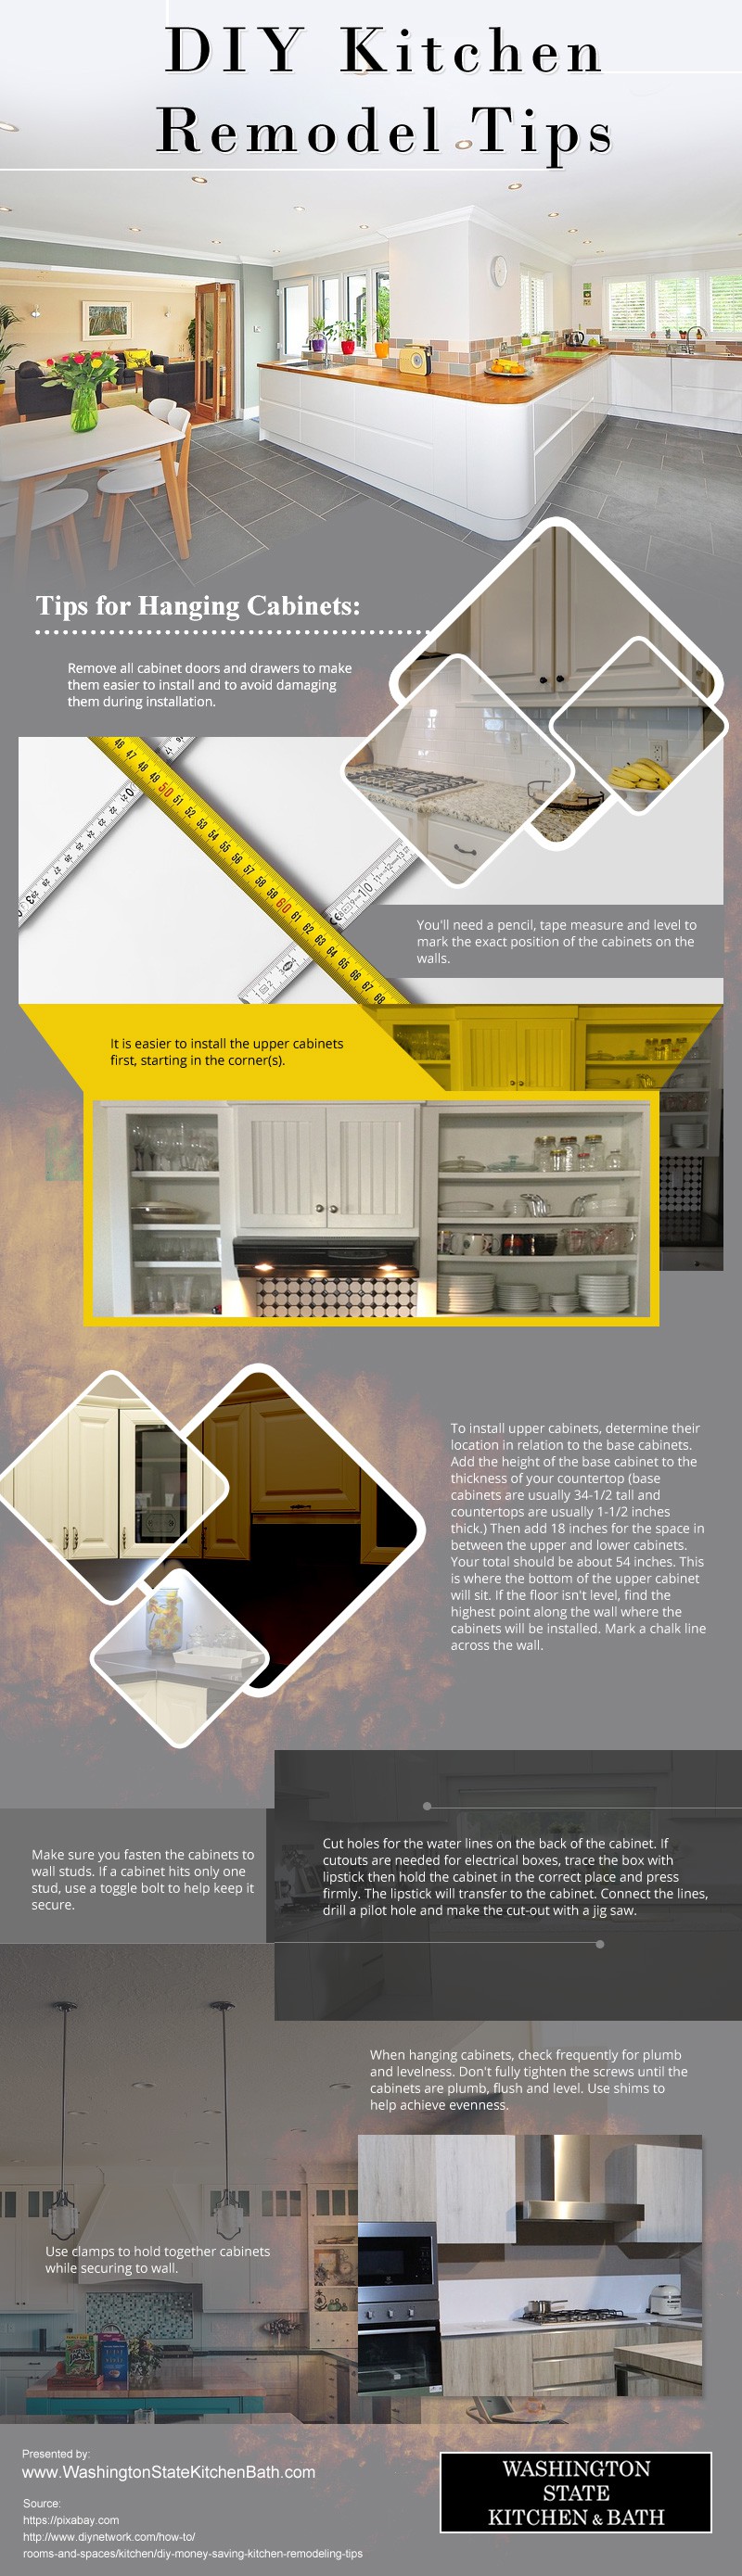 DIY-Kitchen-Remodel-Tips Infographic